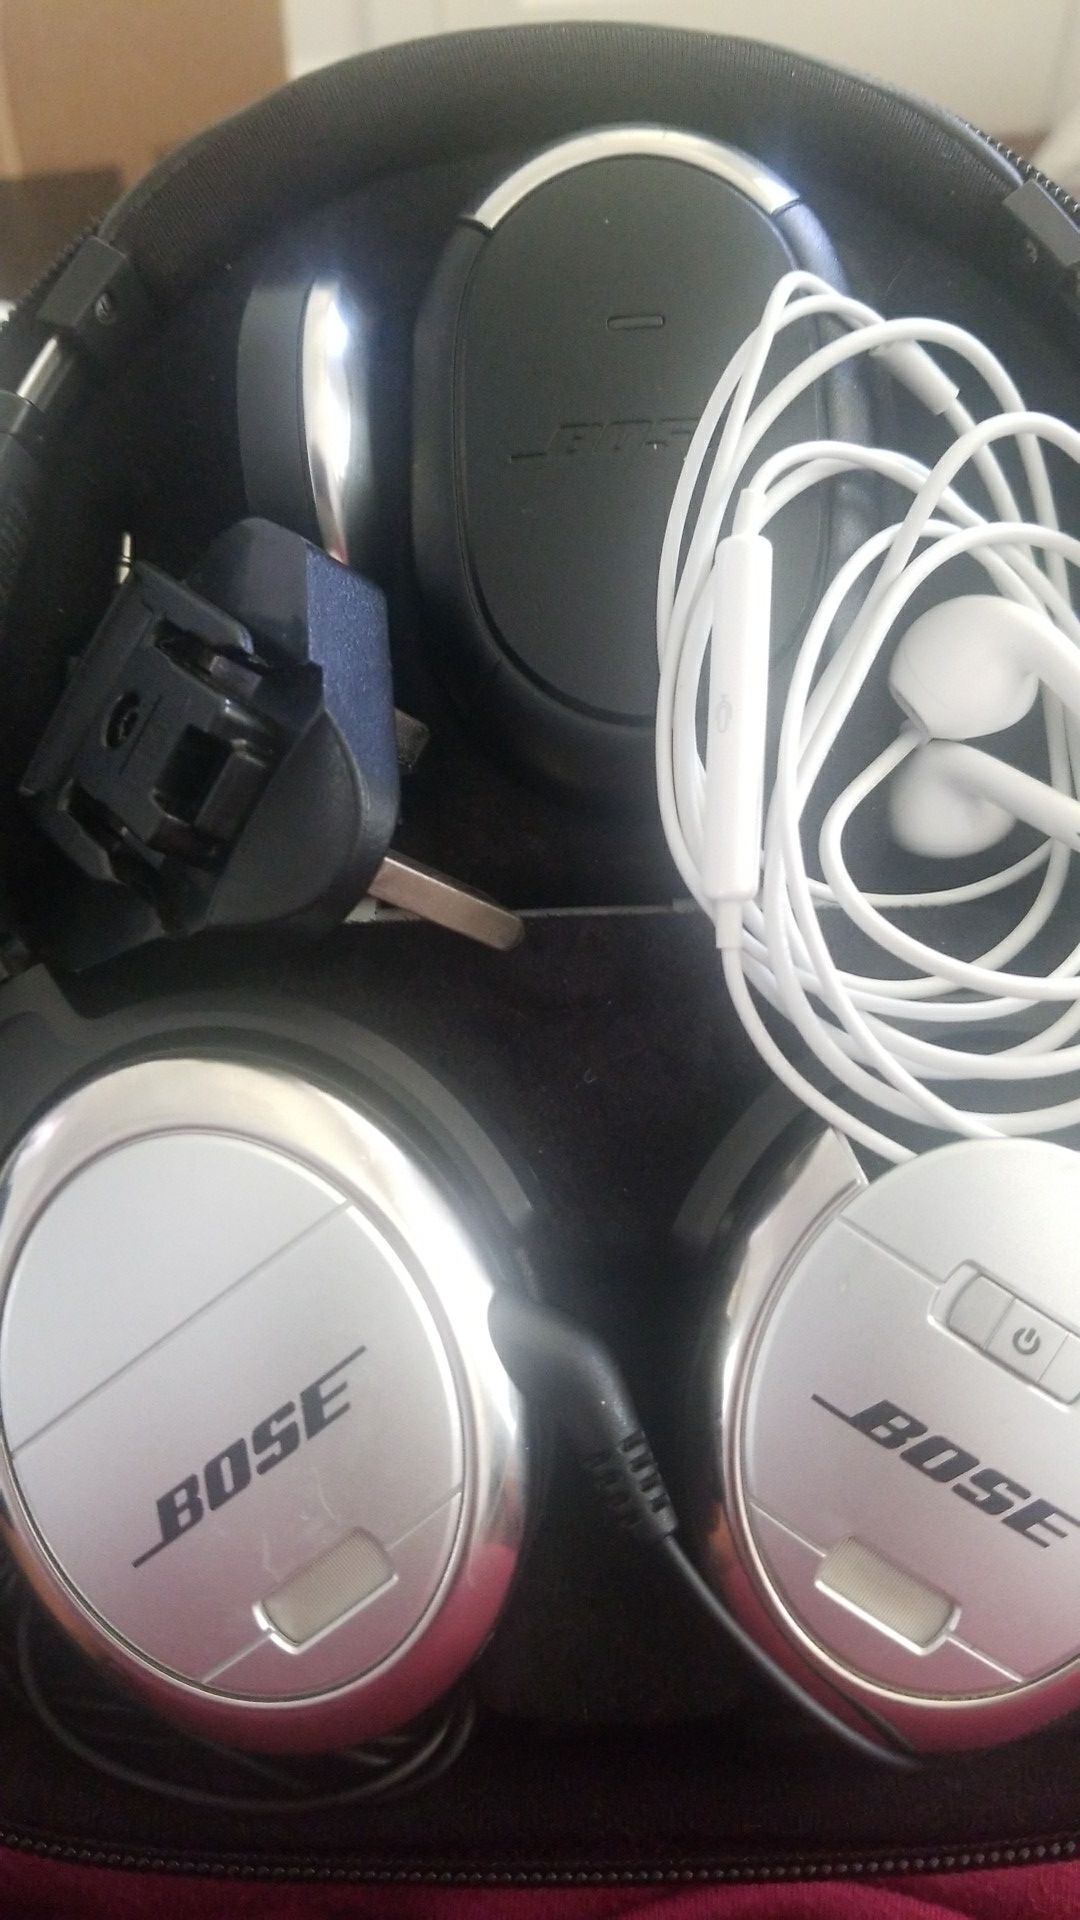 Bose quietcomfort noise cancelling headphones